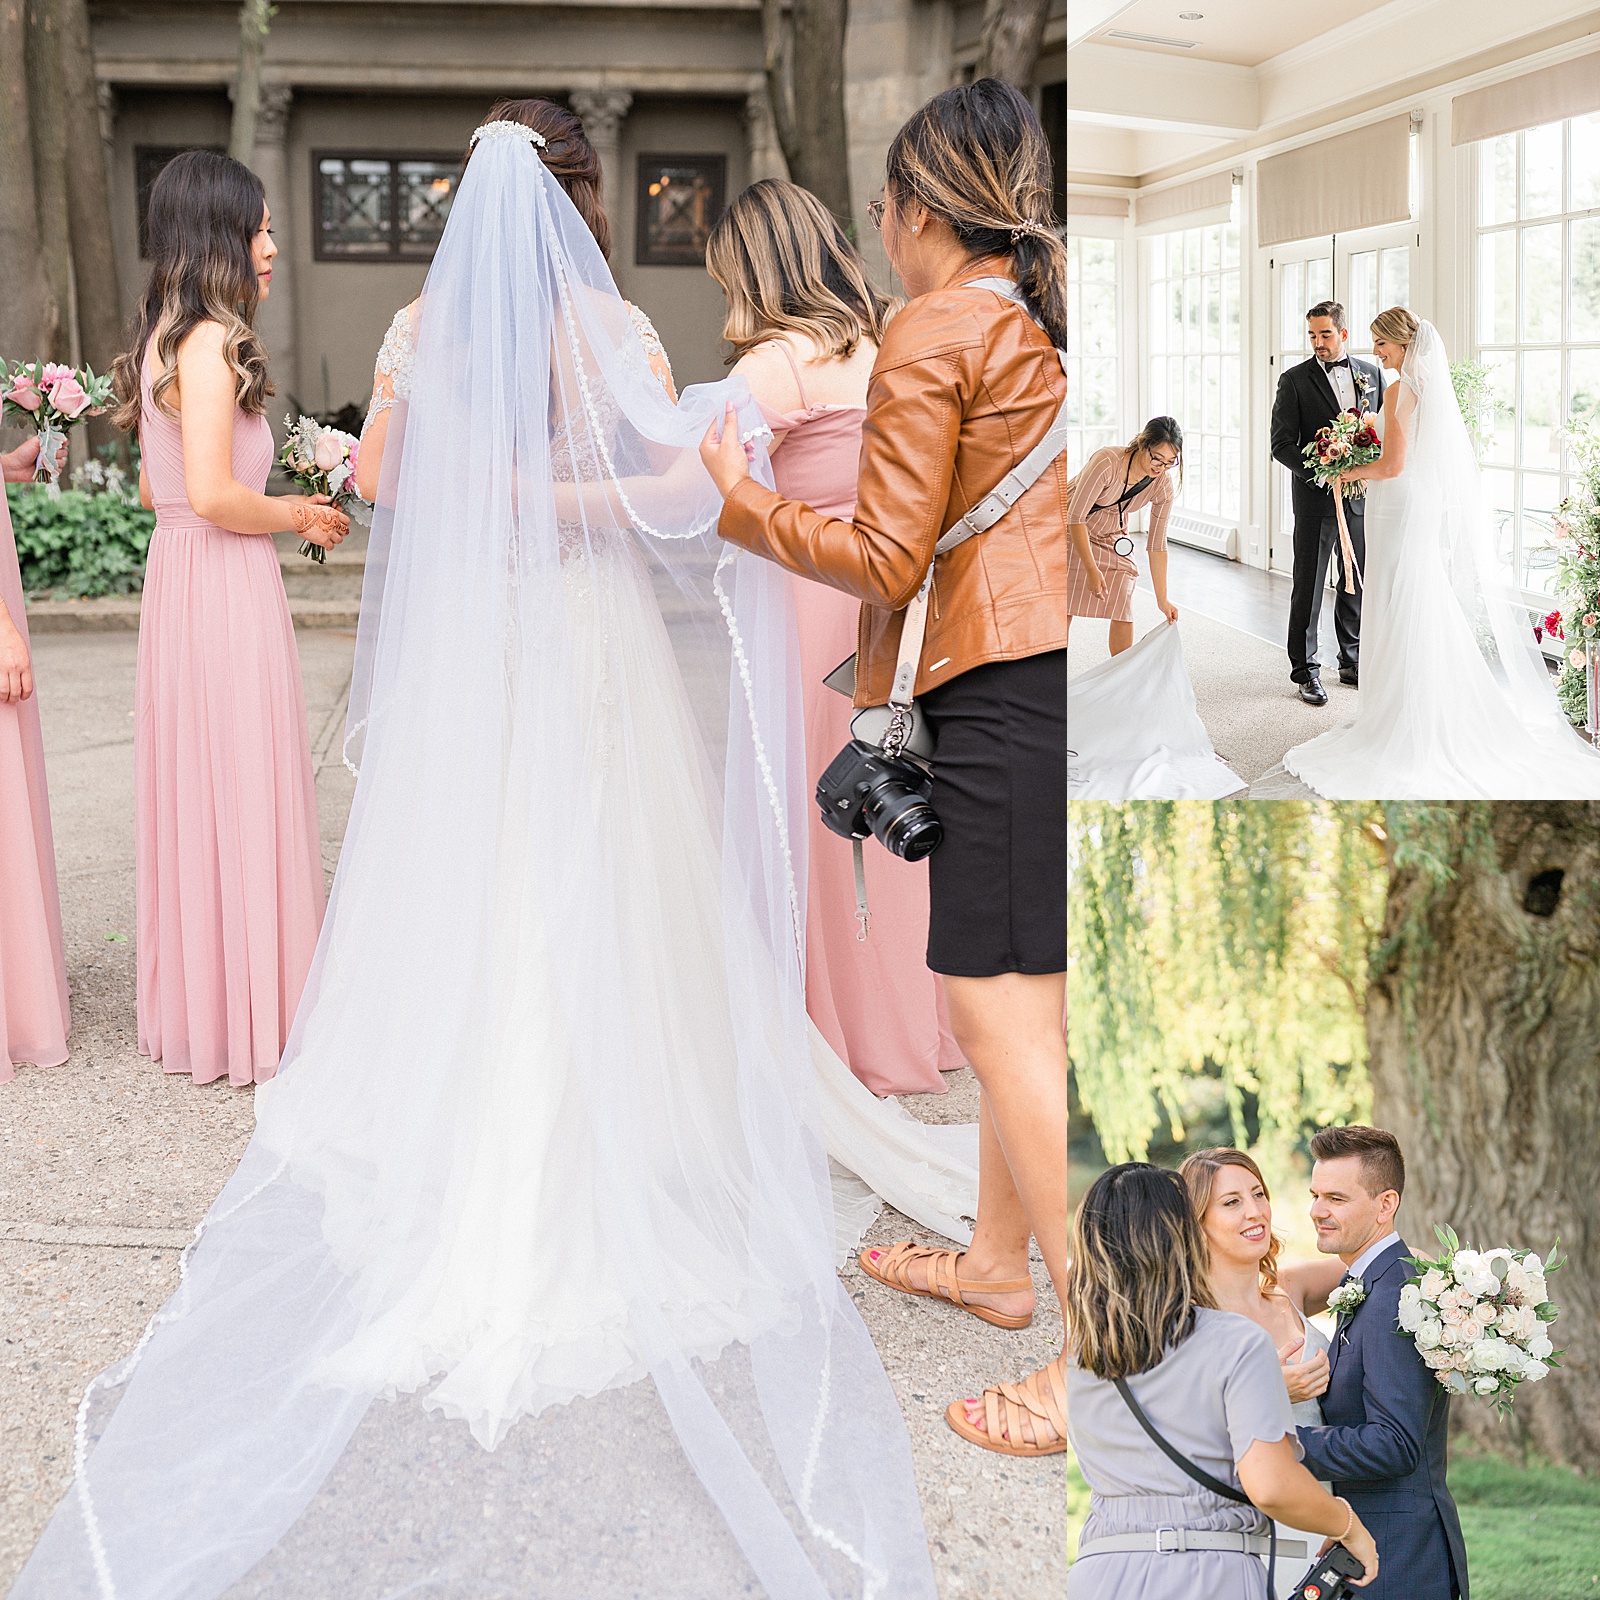 Wedding photographer behind the scenes